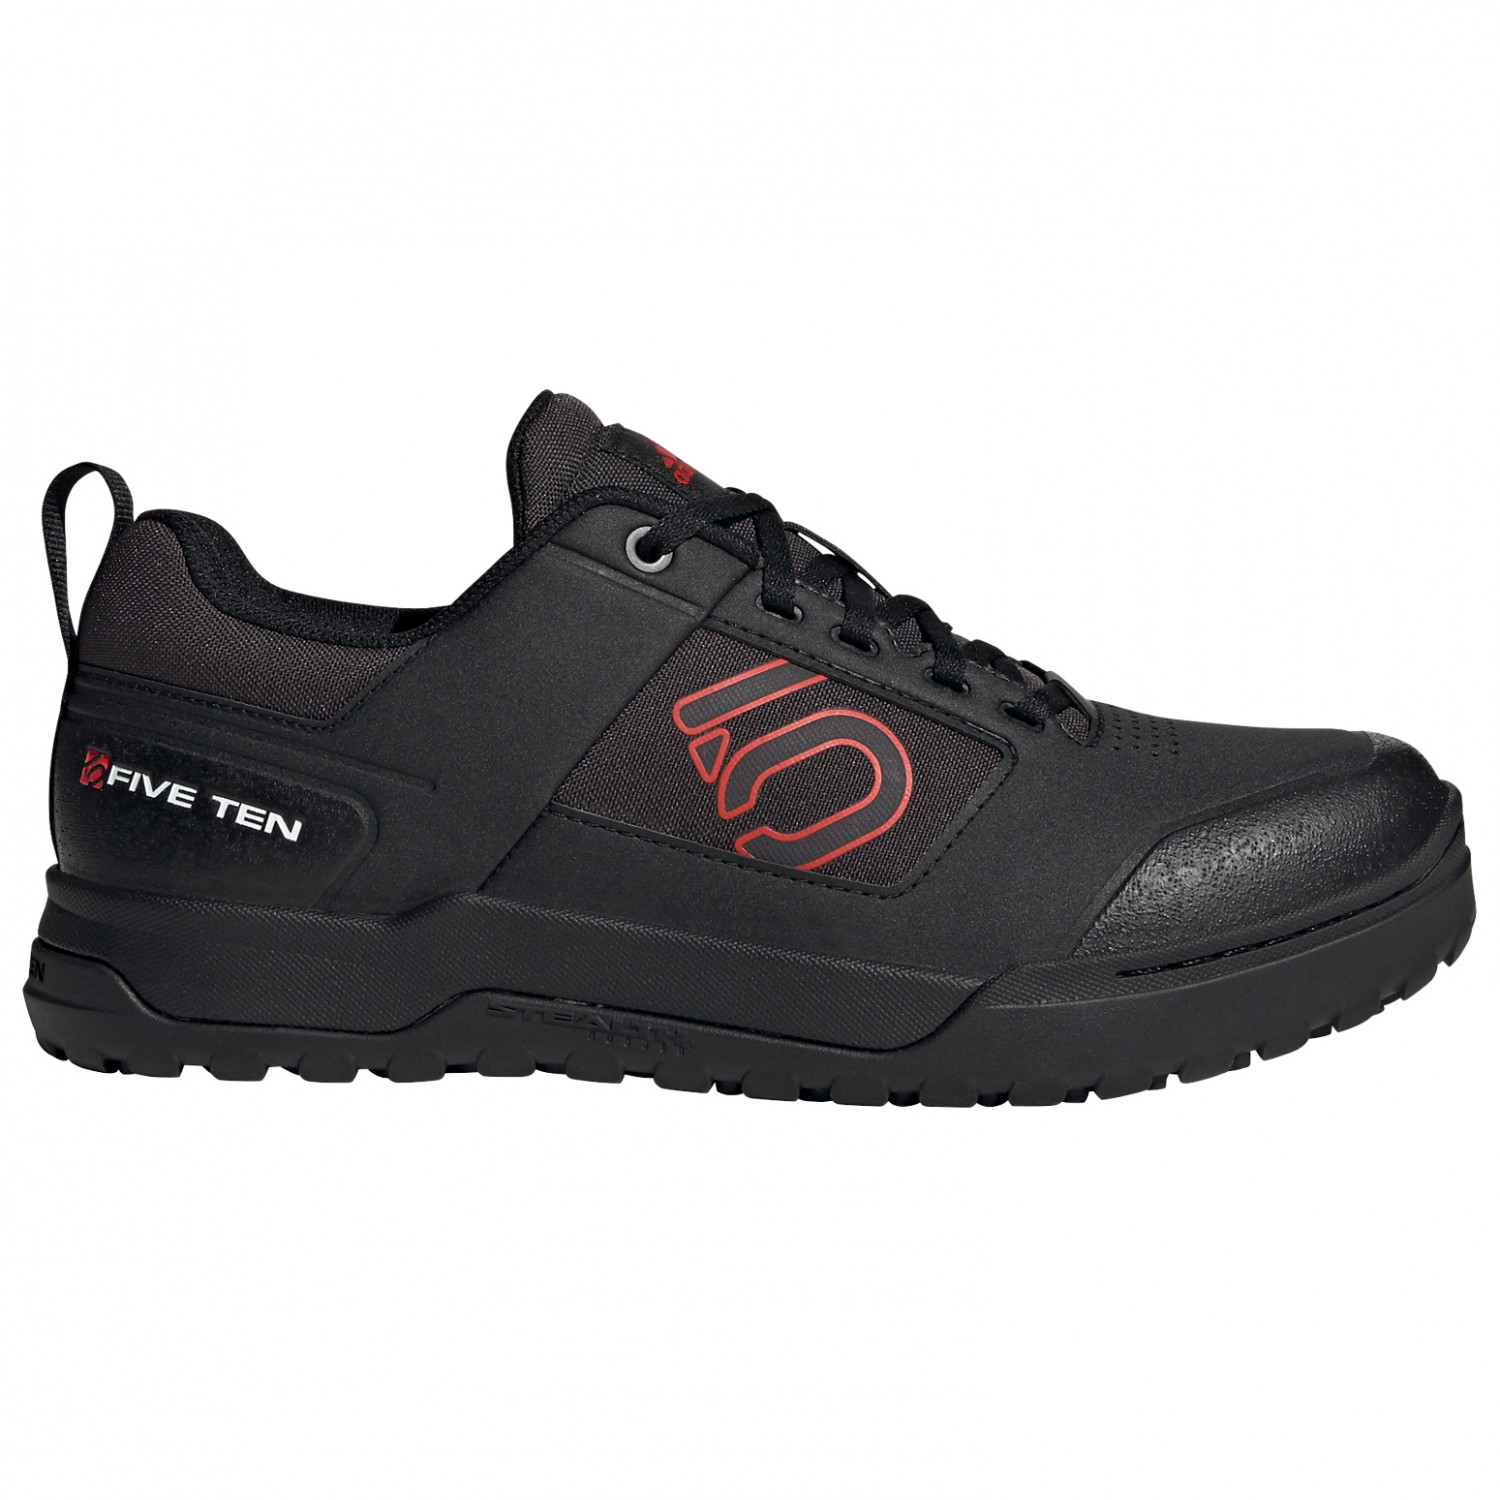 Велосипедная обувь Five Ten Impact Pro, цвет Core Black/Red/Ftwr White туфли schutz keefa цвет miele